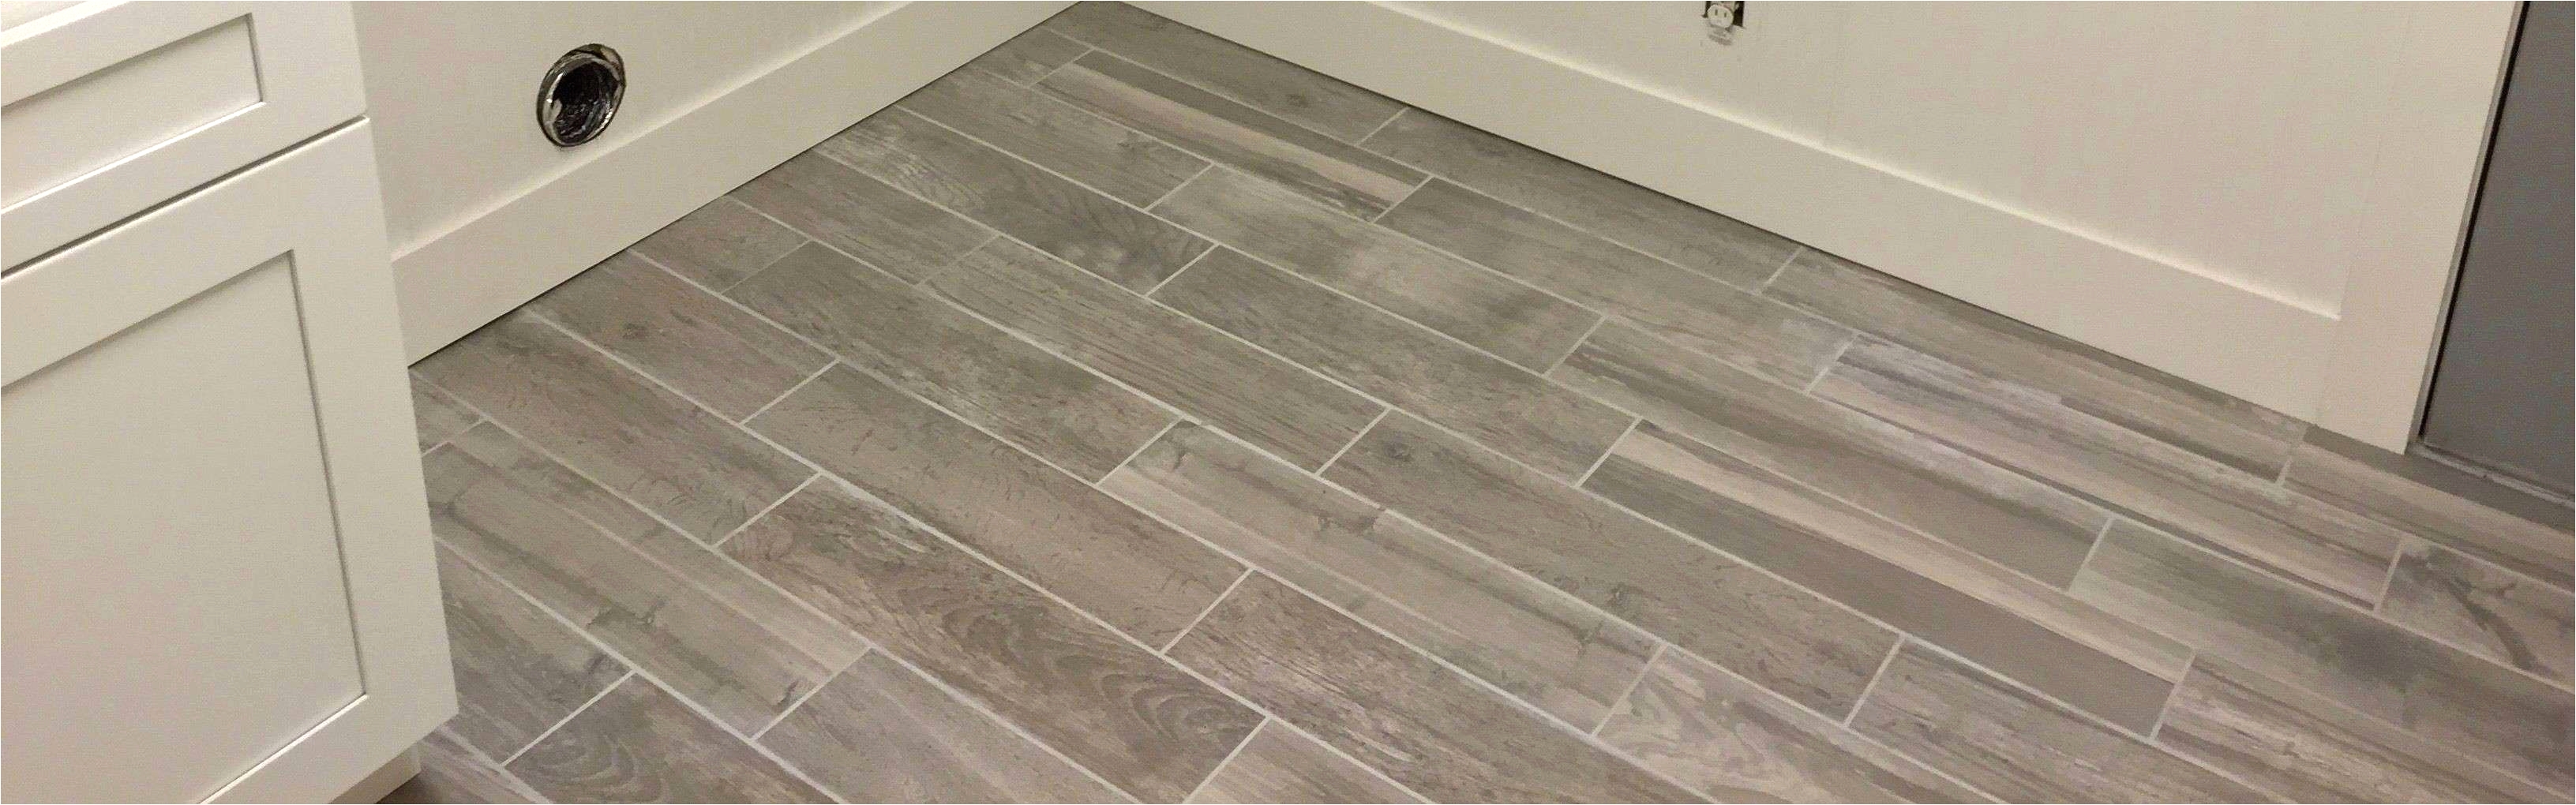 unique bathroom tiling ideas best h sink install bathroom i 0d exciting beautiful fresh bathroom floor